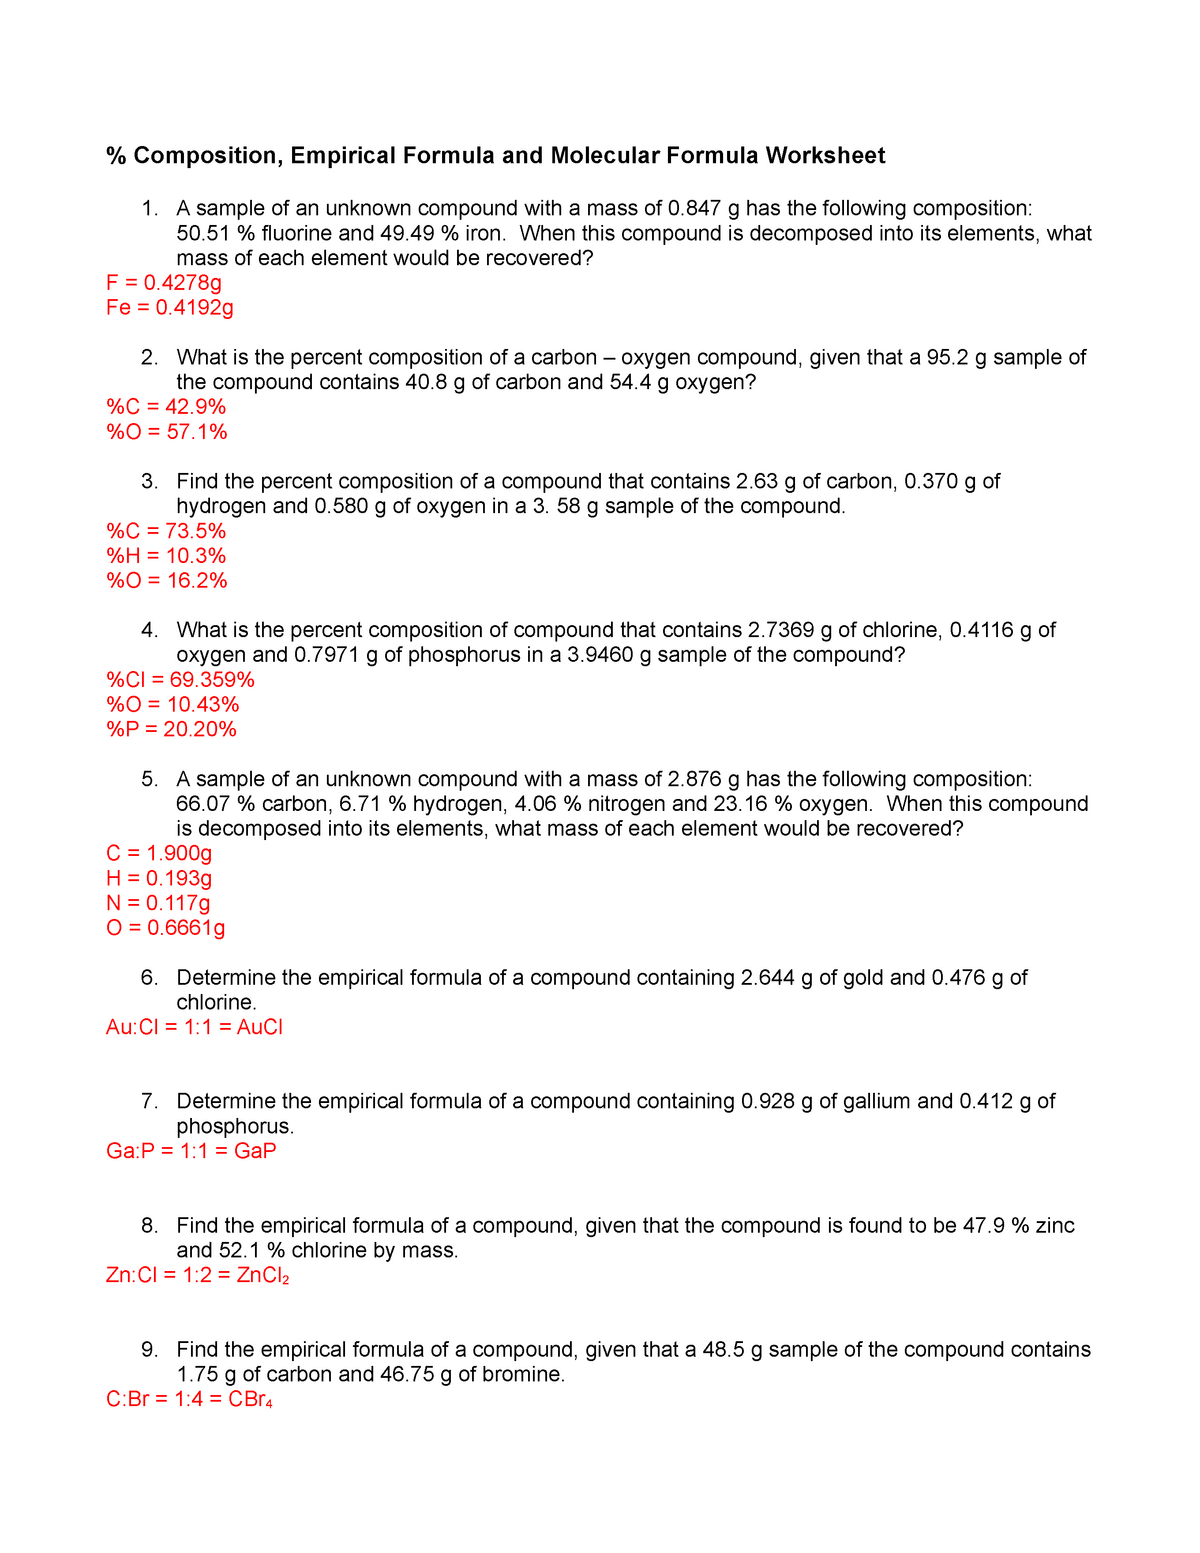 Percent Composition Empirical Formula And Molecular Formula Worksheet Answer Key